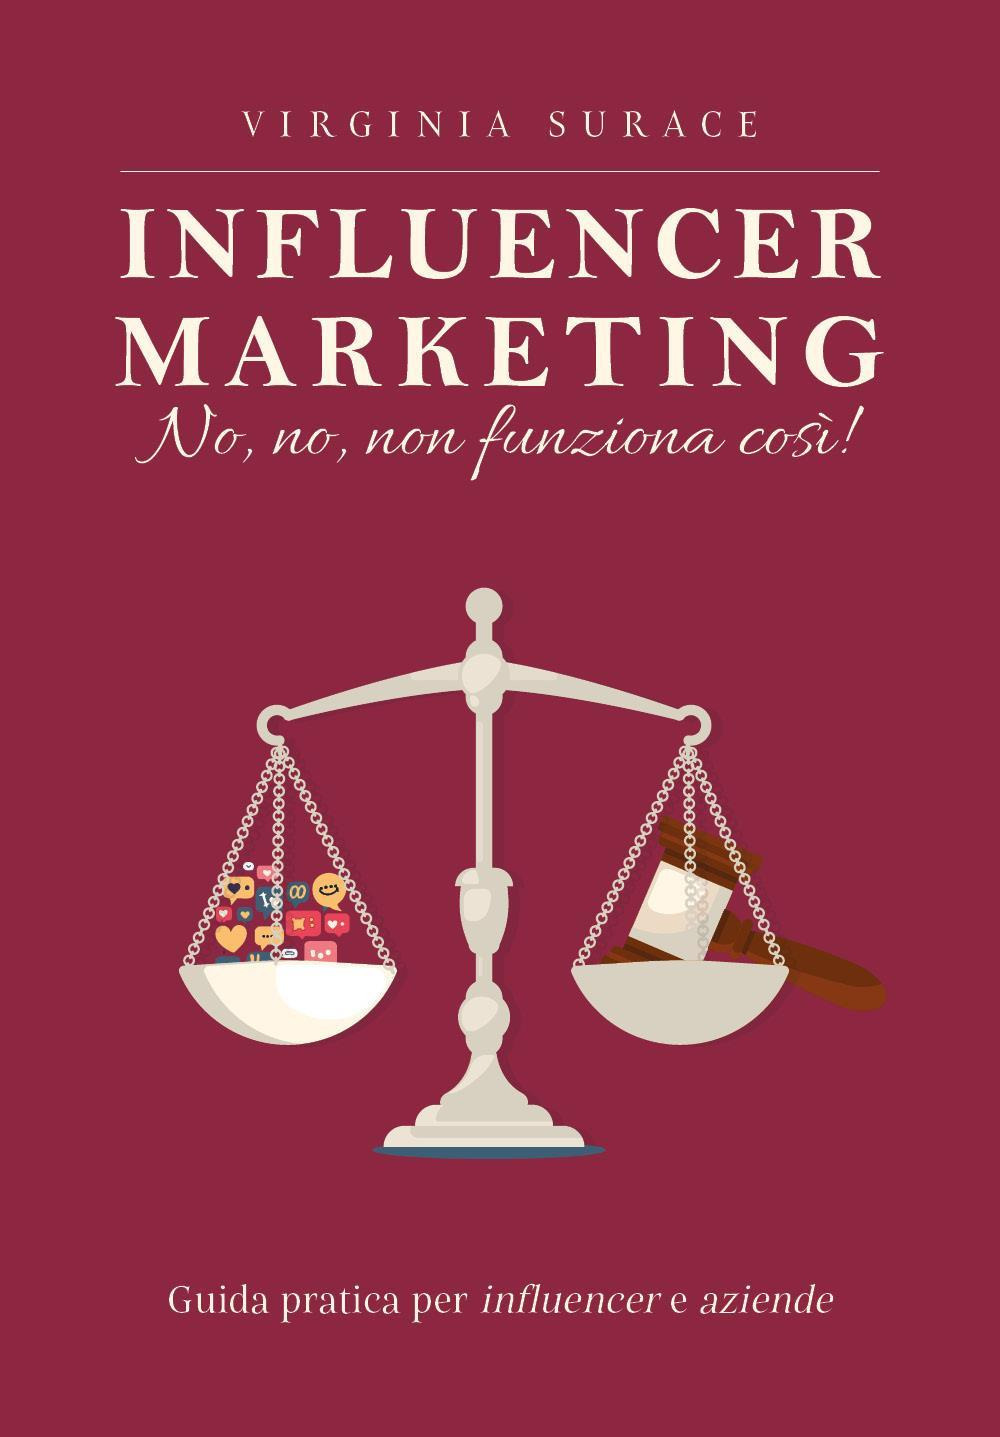 Influencer marketing: no, no, non funziona così! Guida pratica per influencer e aziende